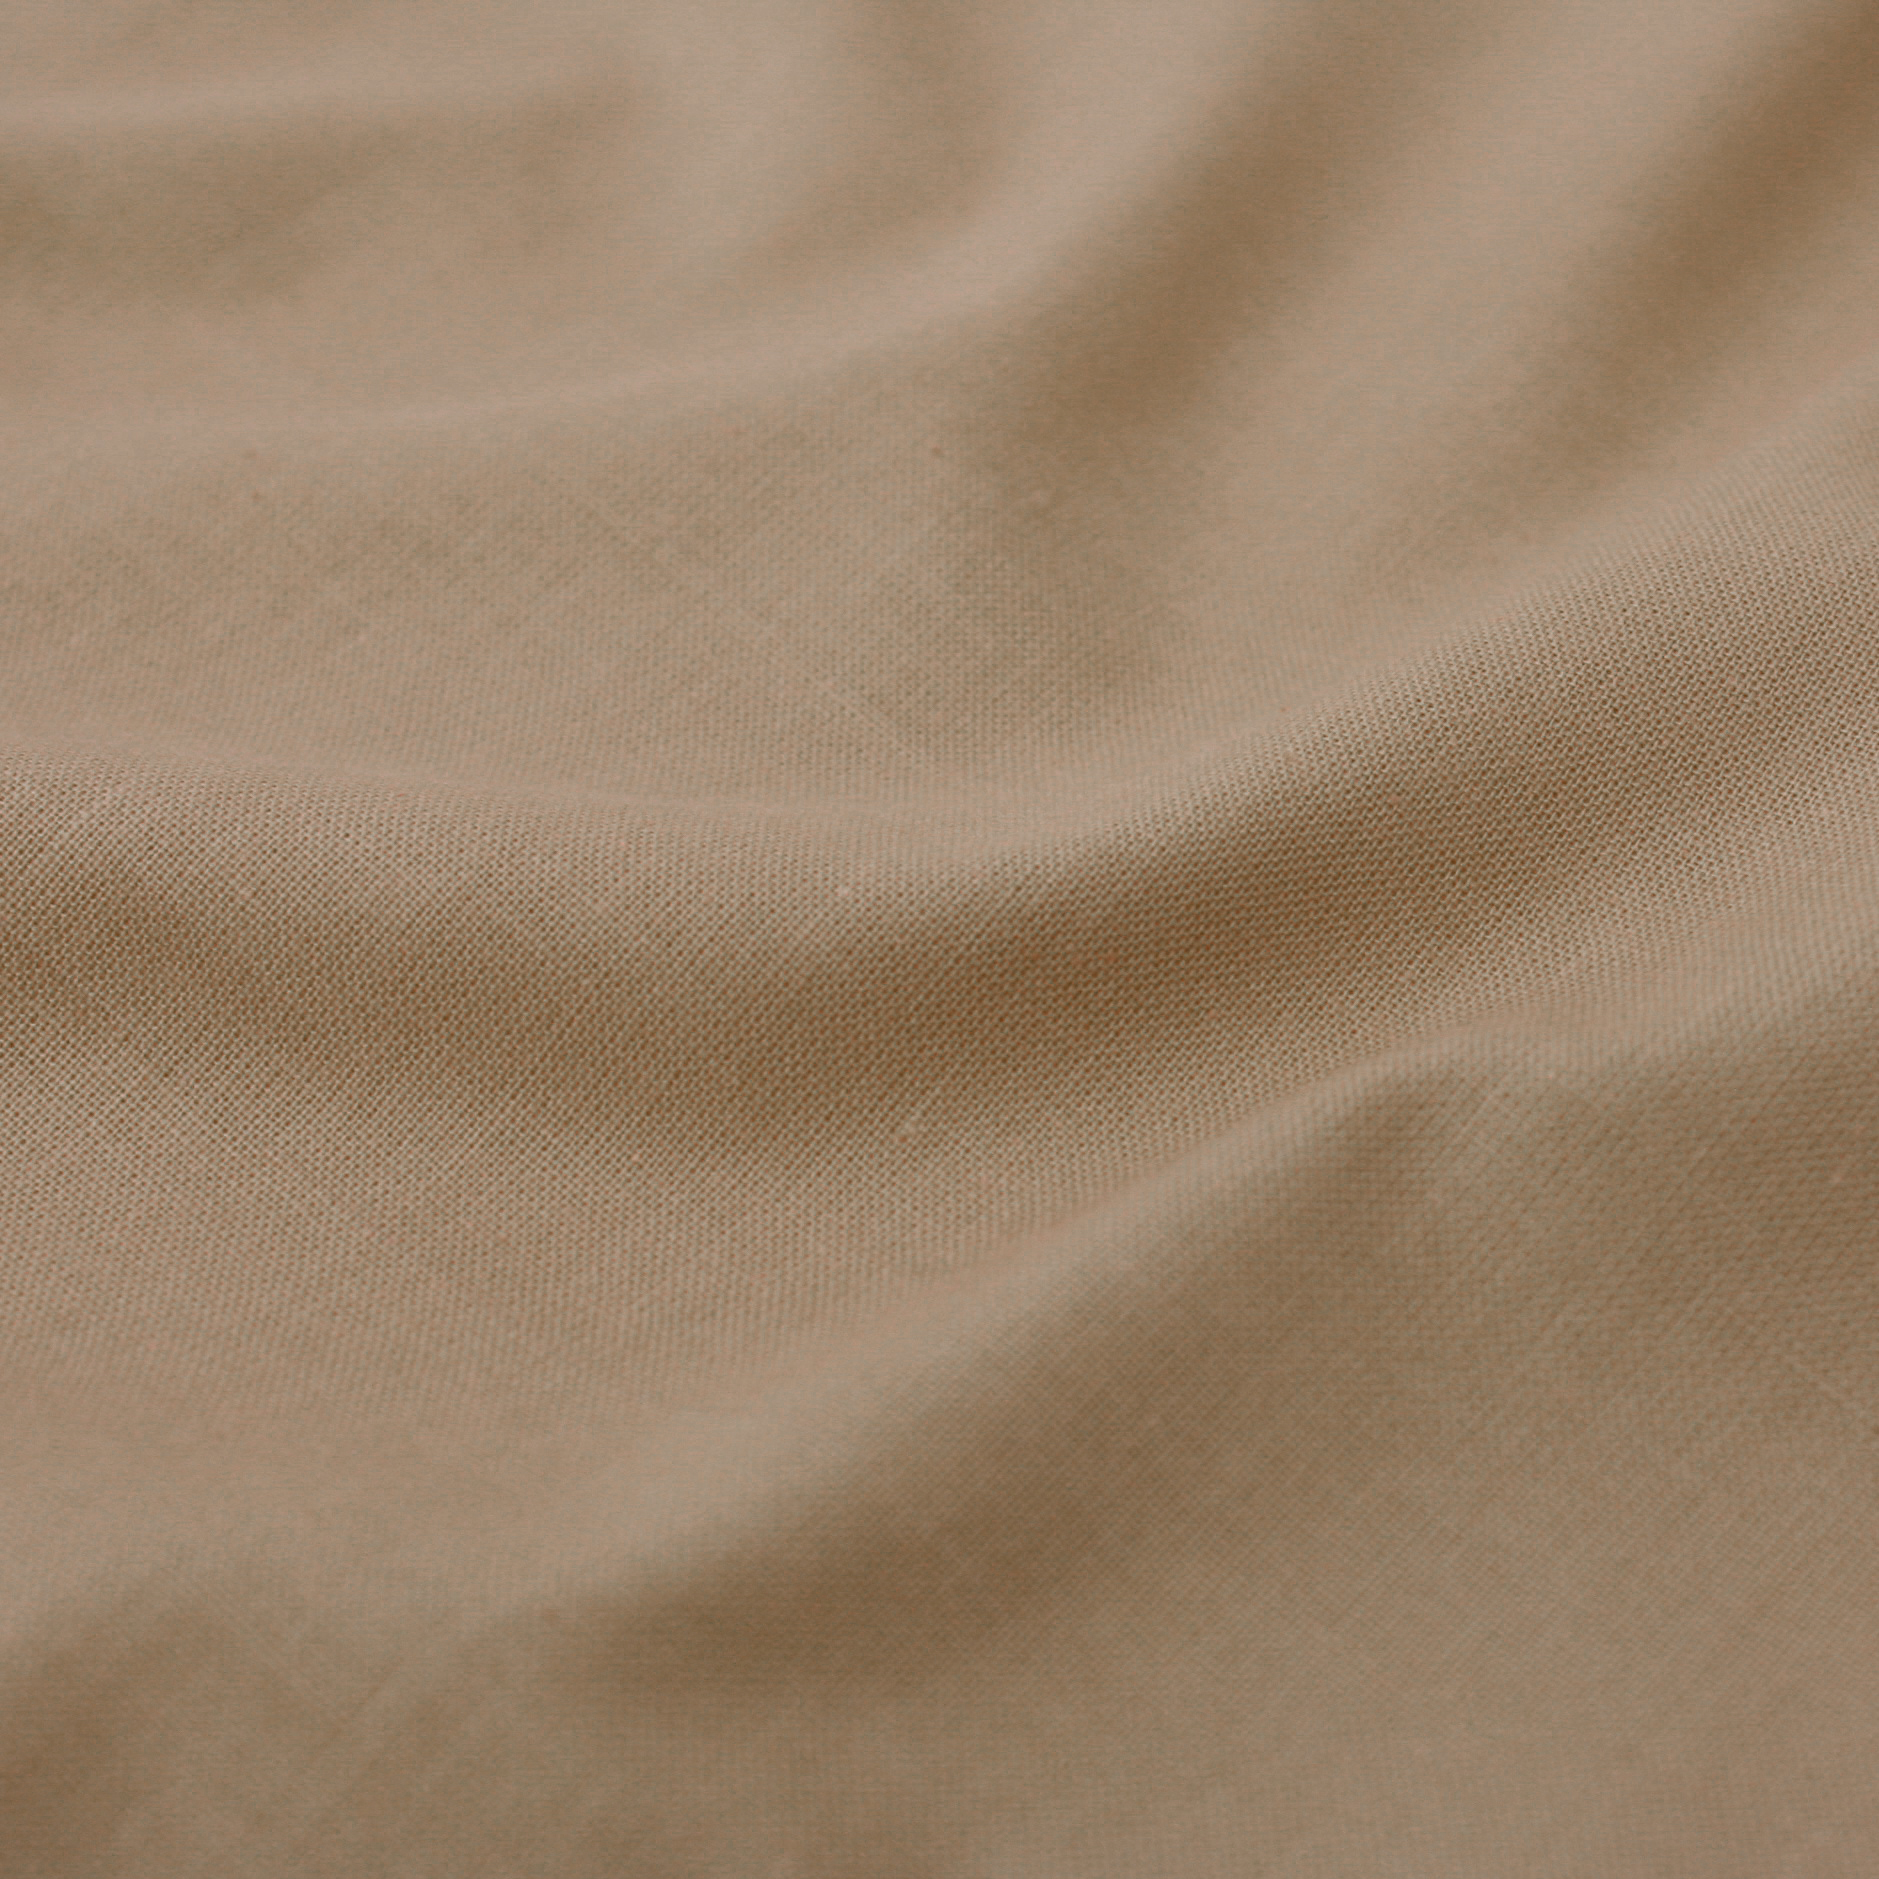 Stoff Meterware Baumwolle Linon Sand